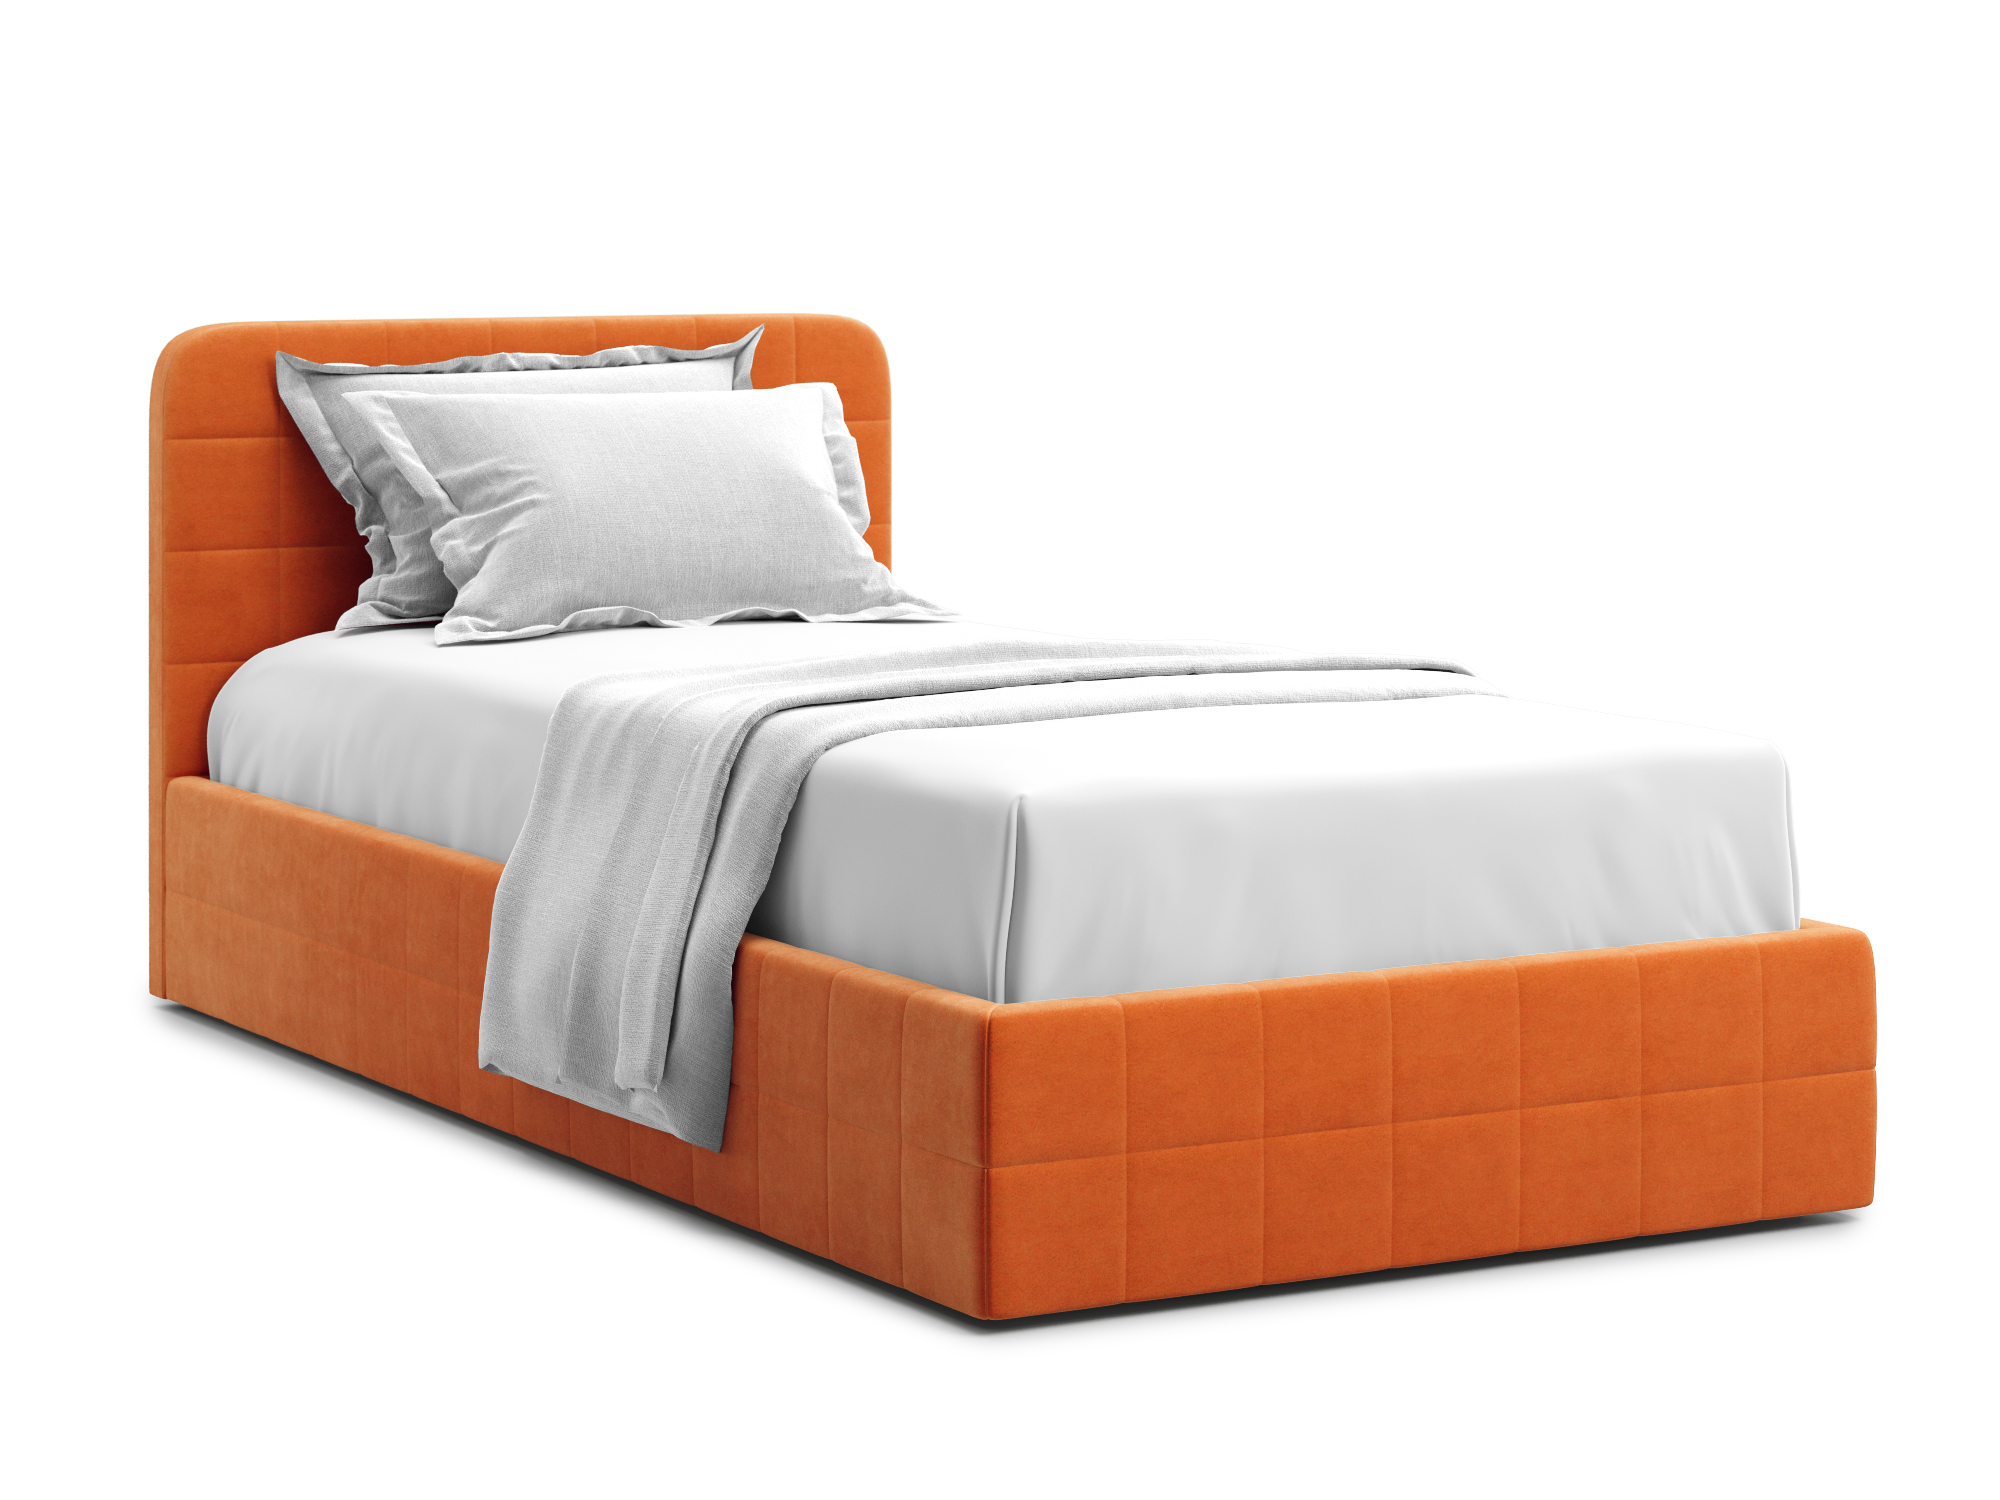 Кровать Adda 90 Velutto 27 Оранжевый, Массив, ДСП кровать adda 90 velutto 17 бежевый массив дсп